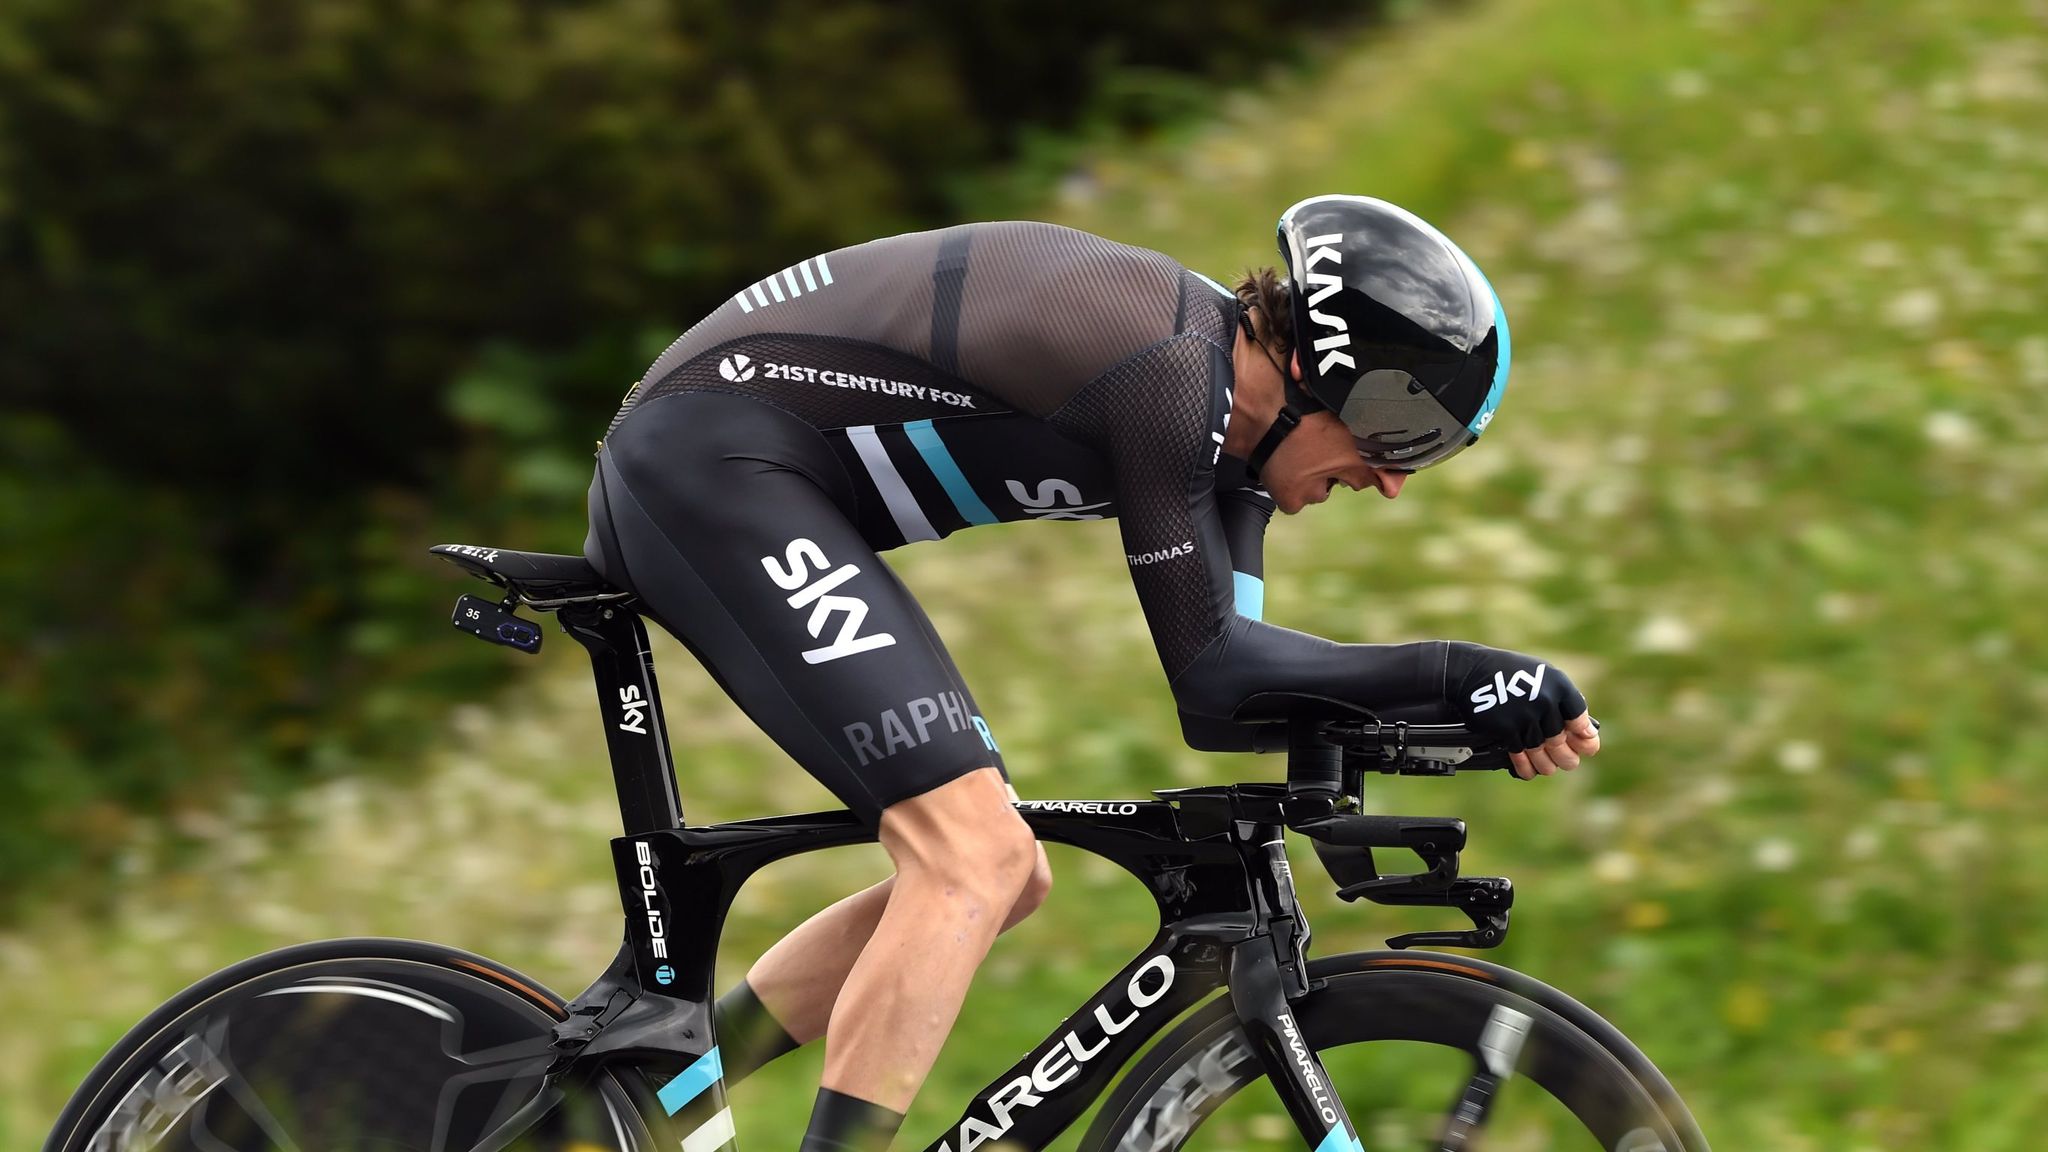 Overleven Vete zo Tour TT to showcase Team Sky tech | Cycling News | Sky Sports